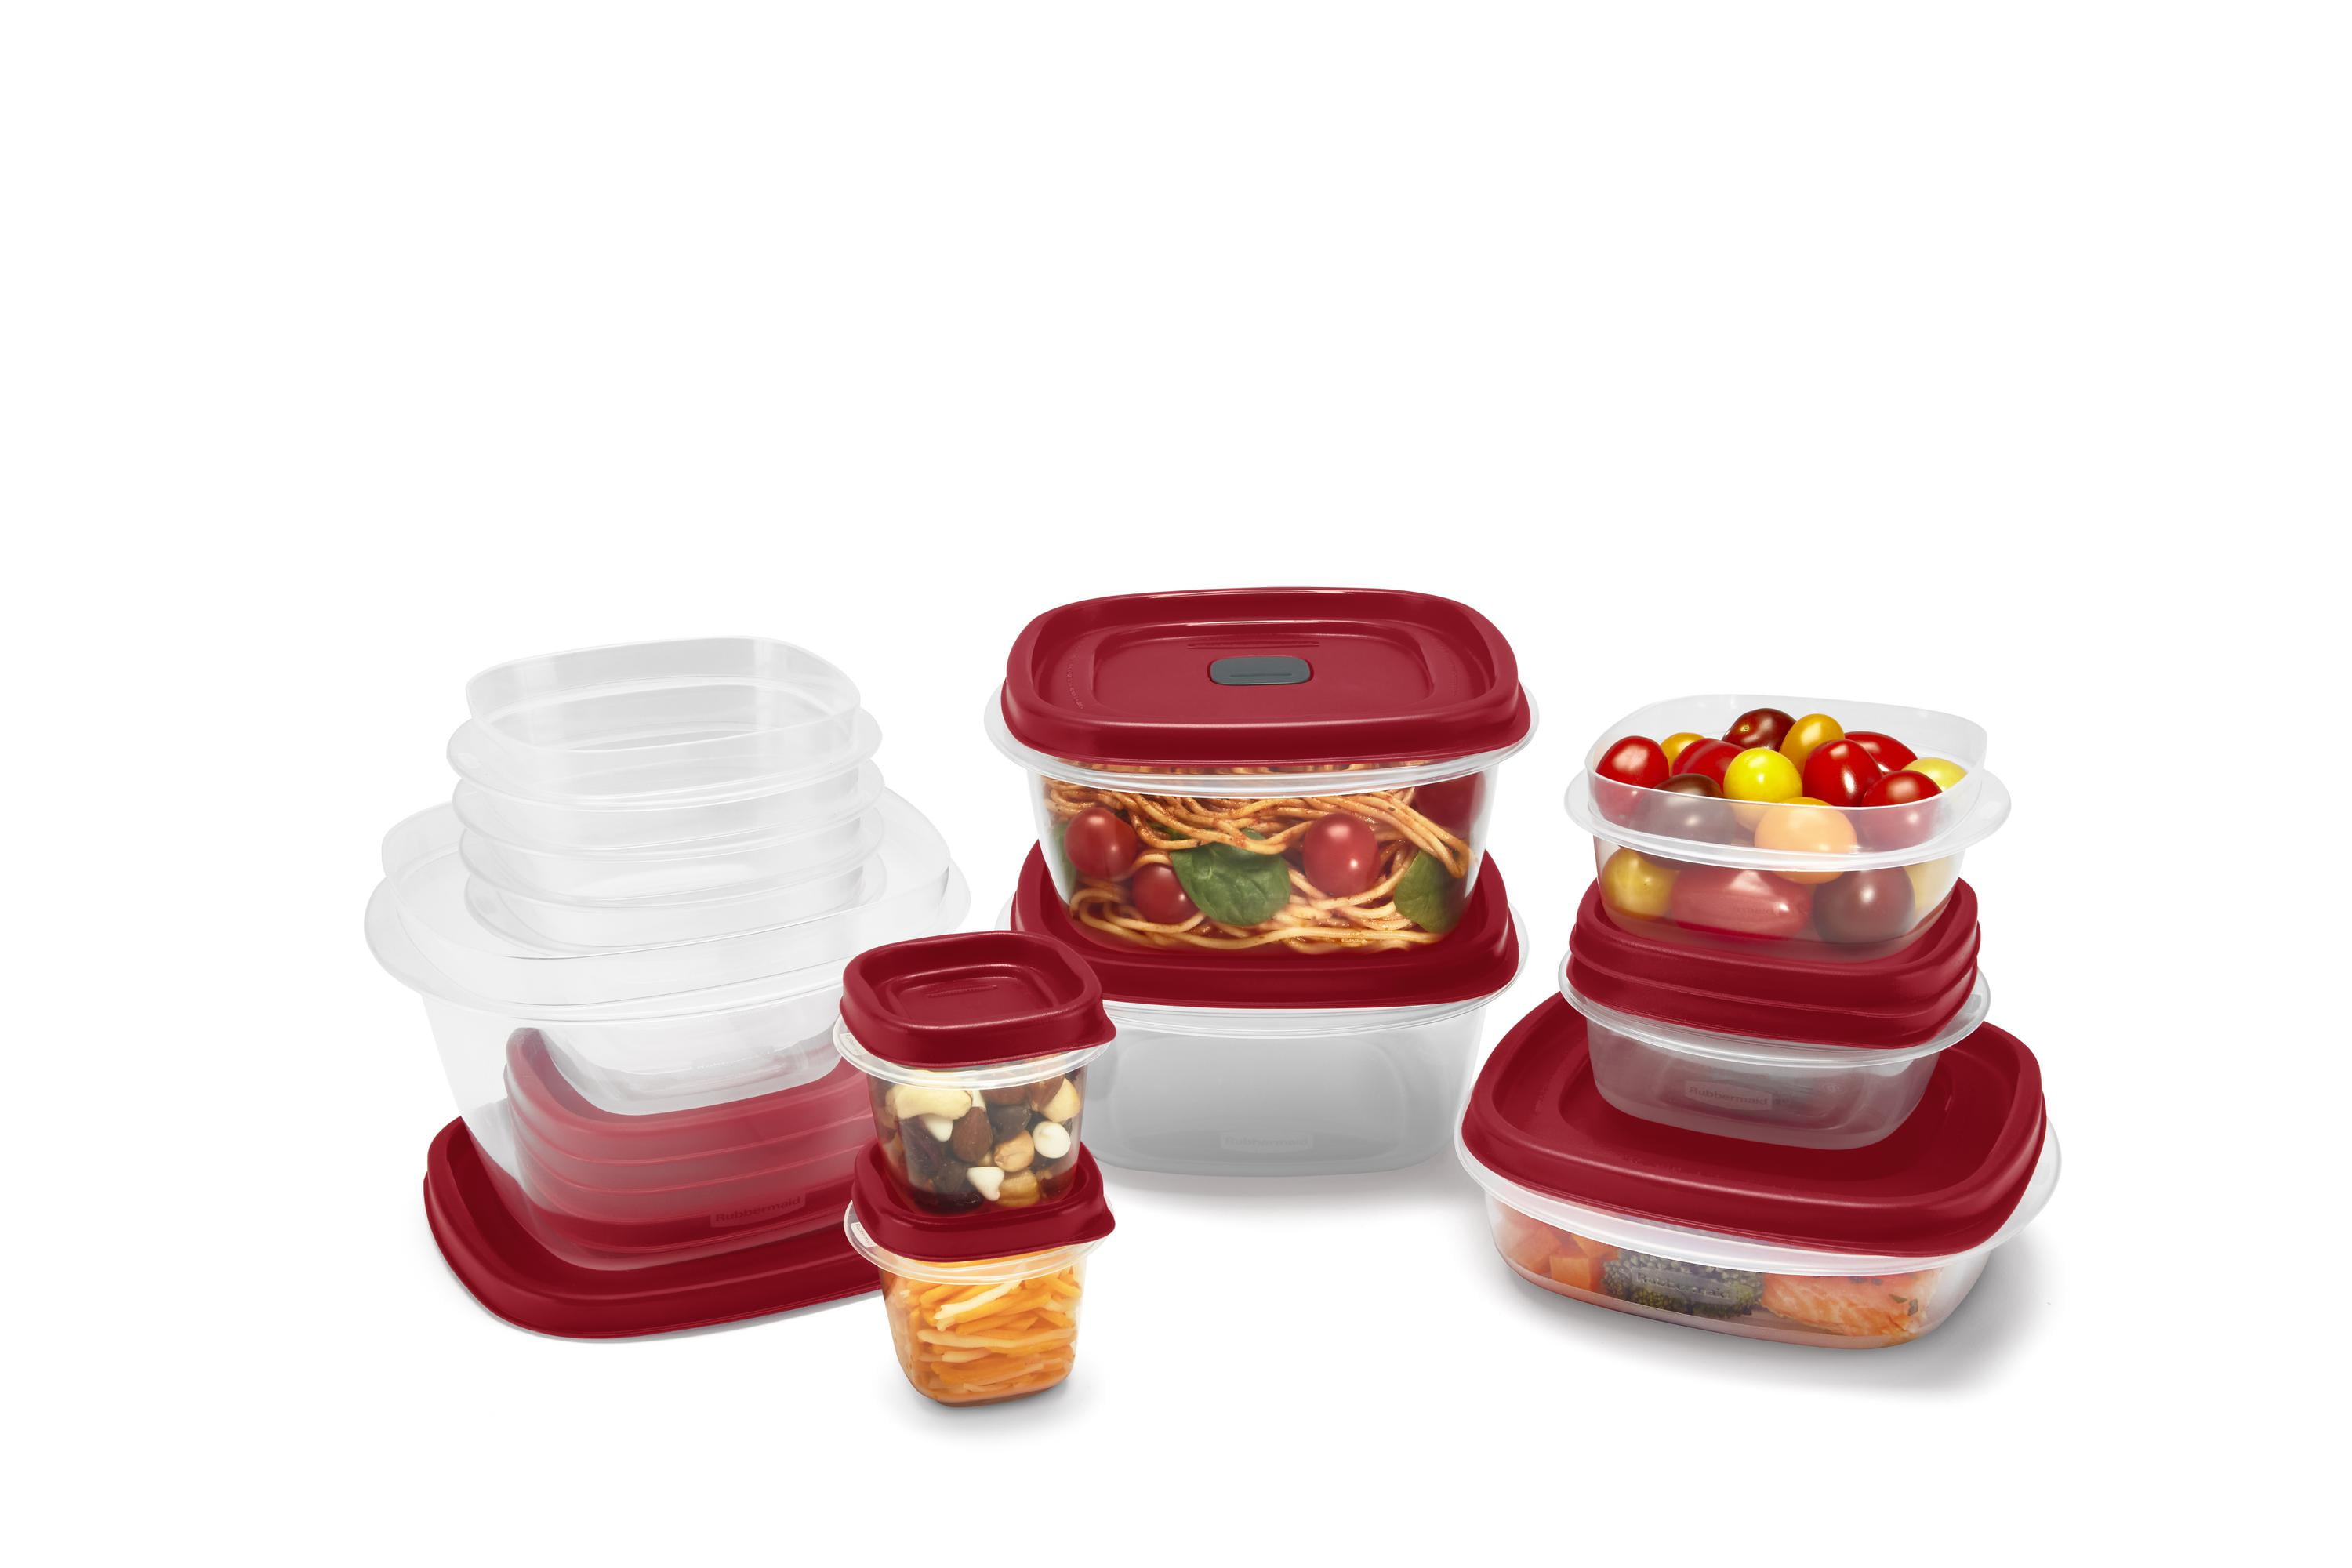 Rubbermaid EasyFindLids 24 Piece Food Storage Containers Variety Set, Red